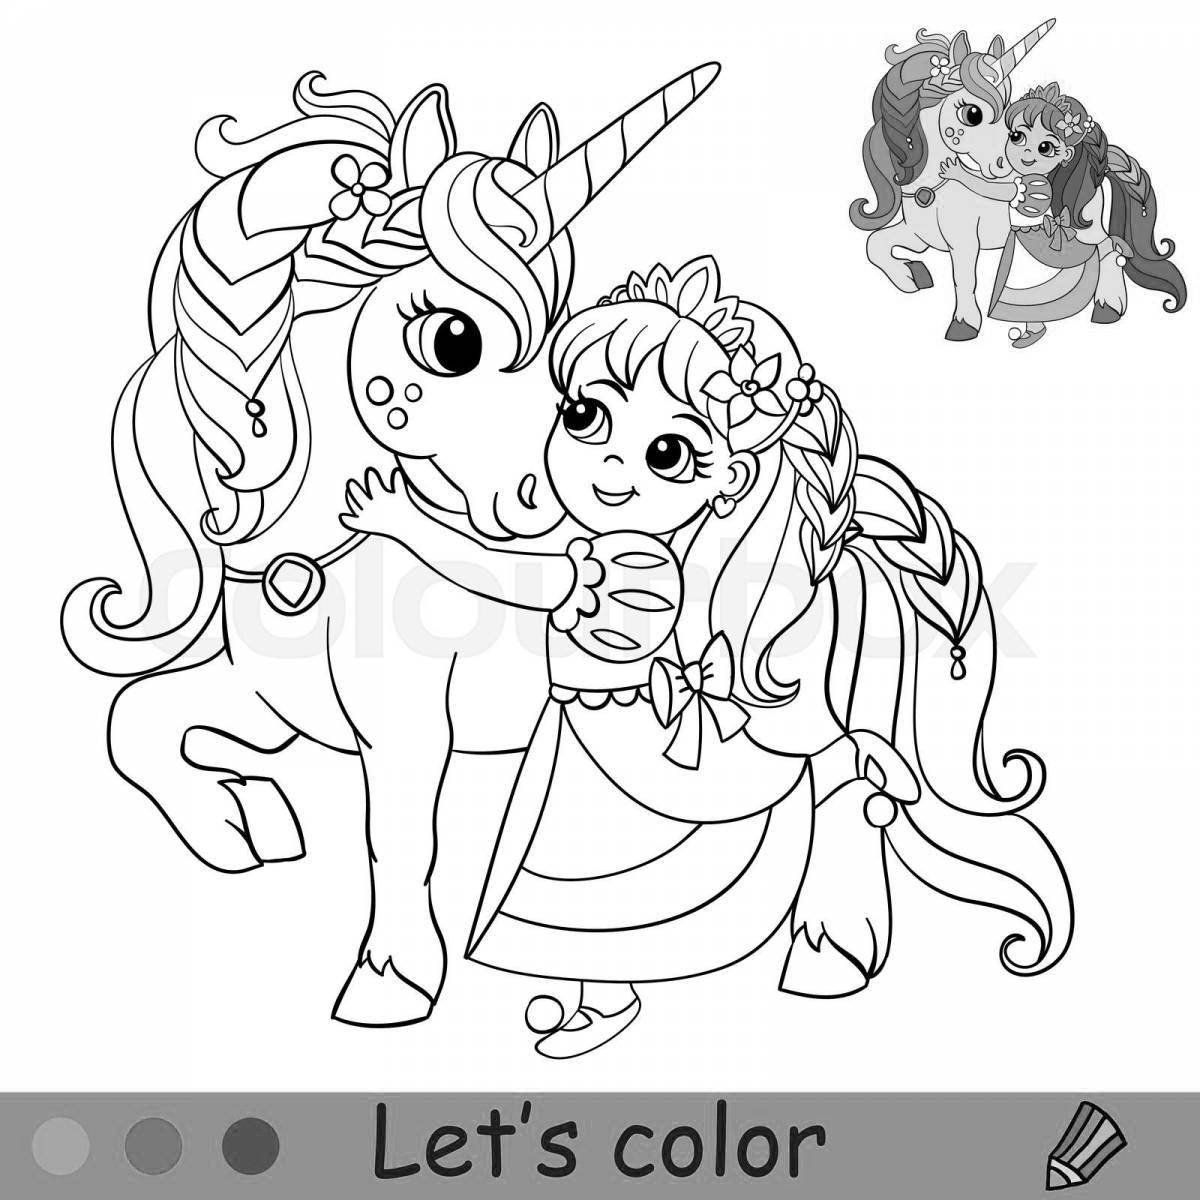 Adorable unicorn dog coloring page